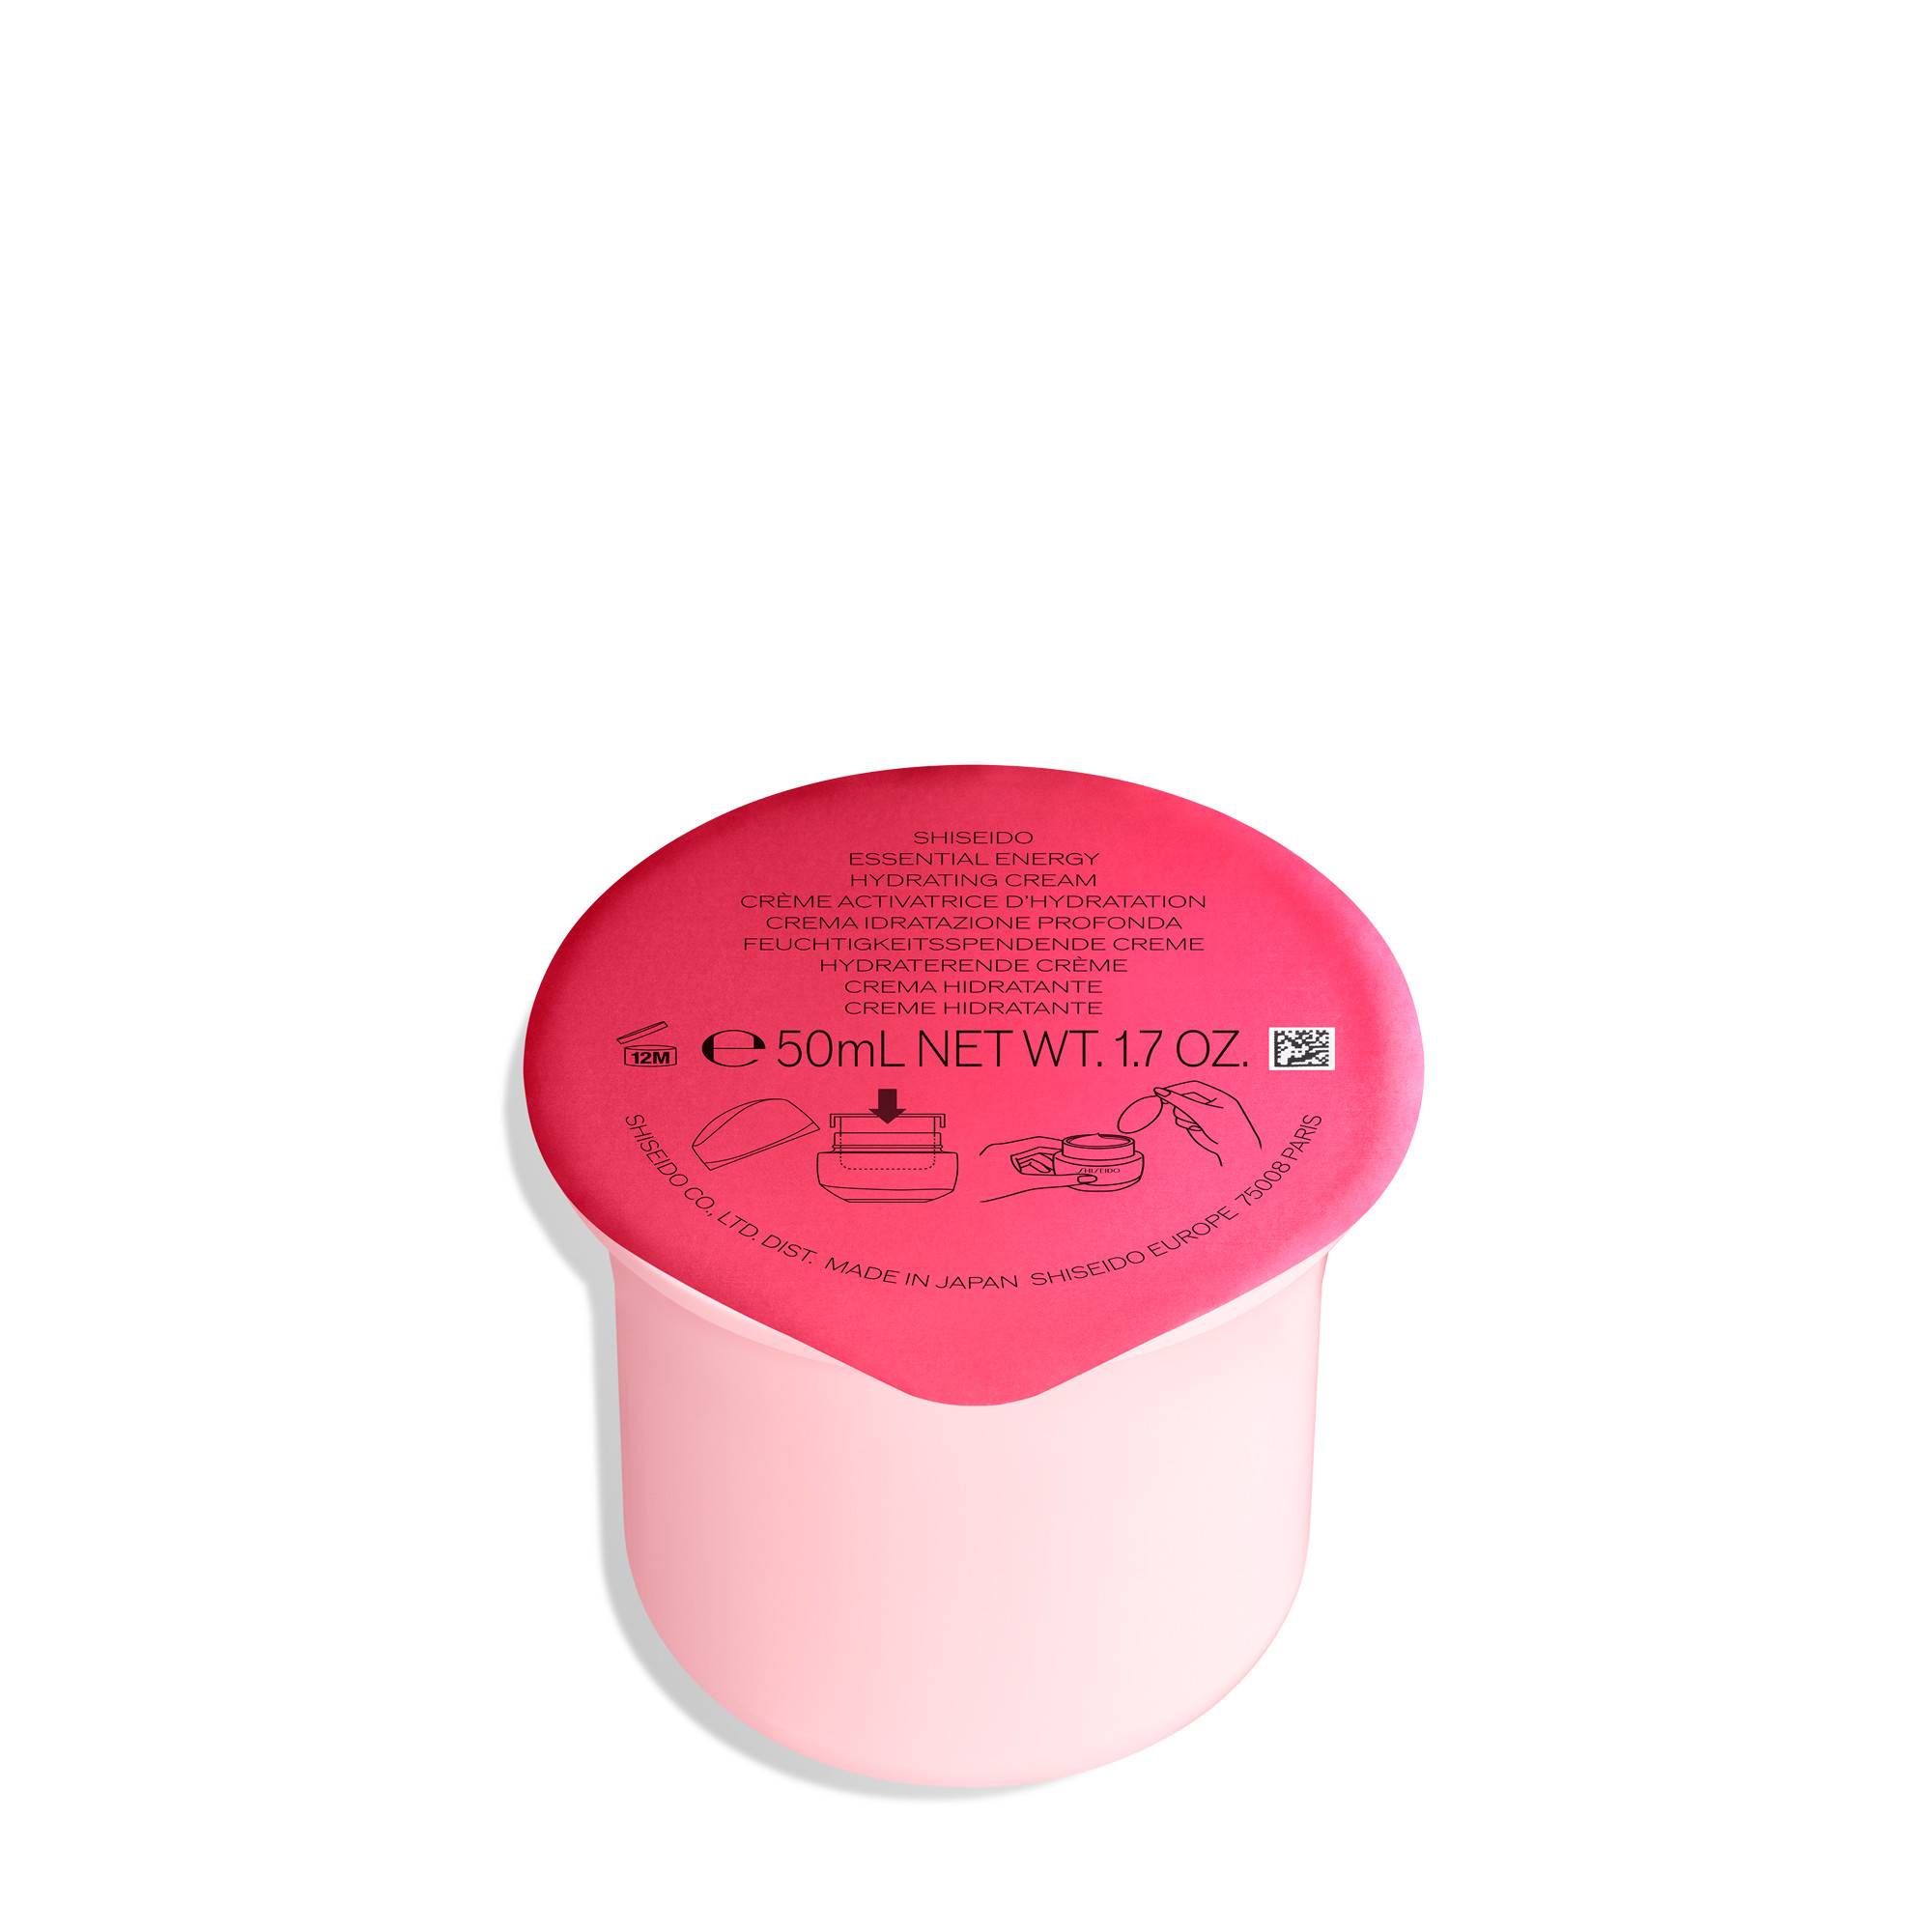 Essential Energy Hydrating Cream - Shiseido